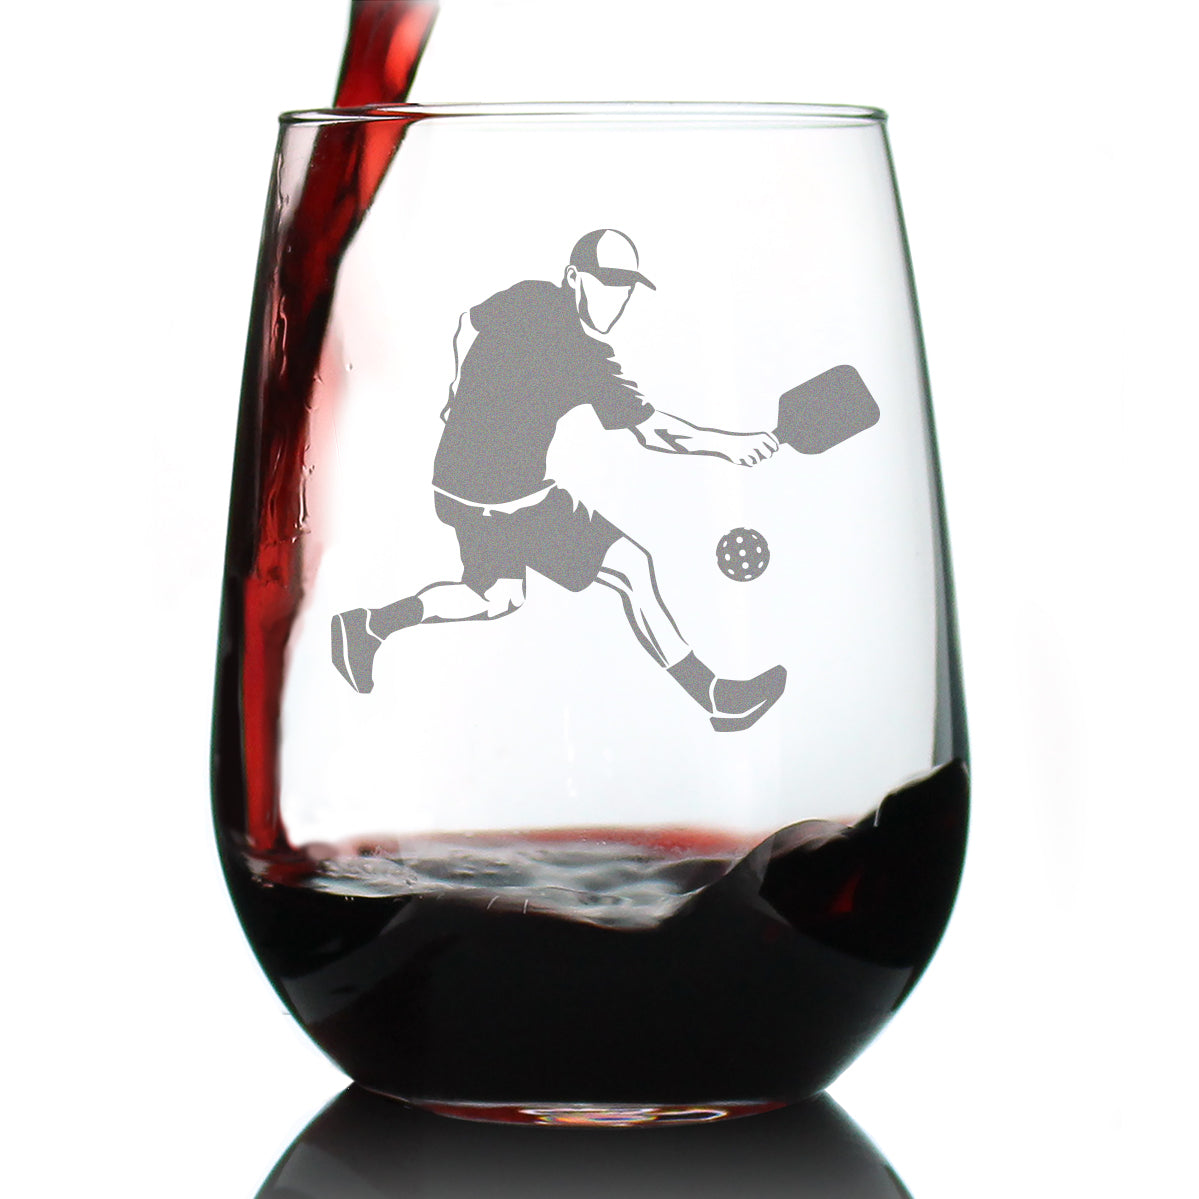 Pickleball Player Man Stemless Wine Glass - Pickleball Gifts and Decor for Men - Large 17 Oz Glasses